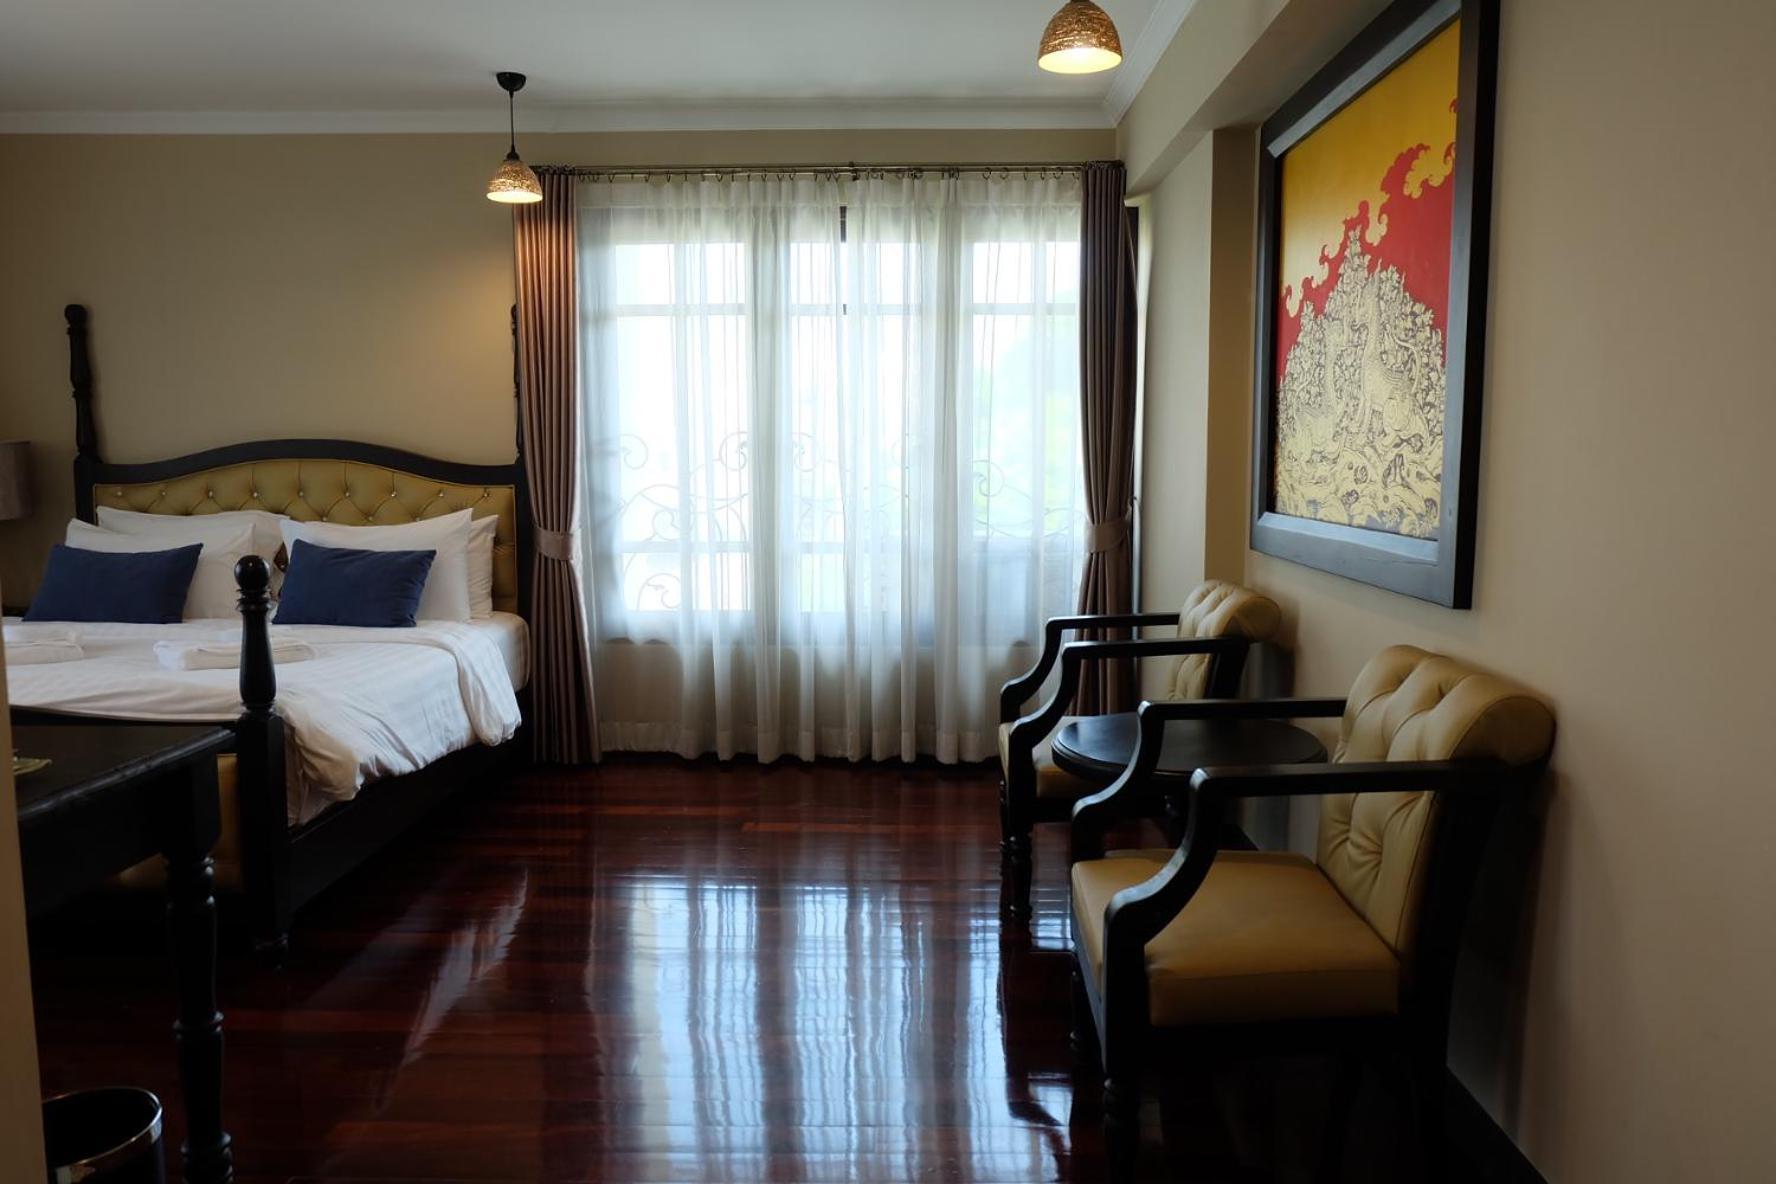 Siri Heritage Bangkok Hotel Luaran gambar